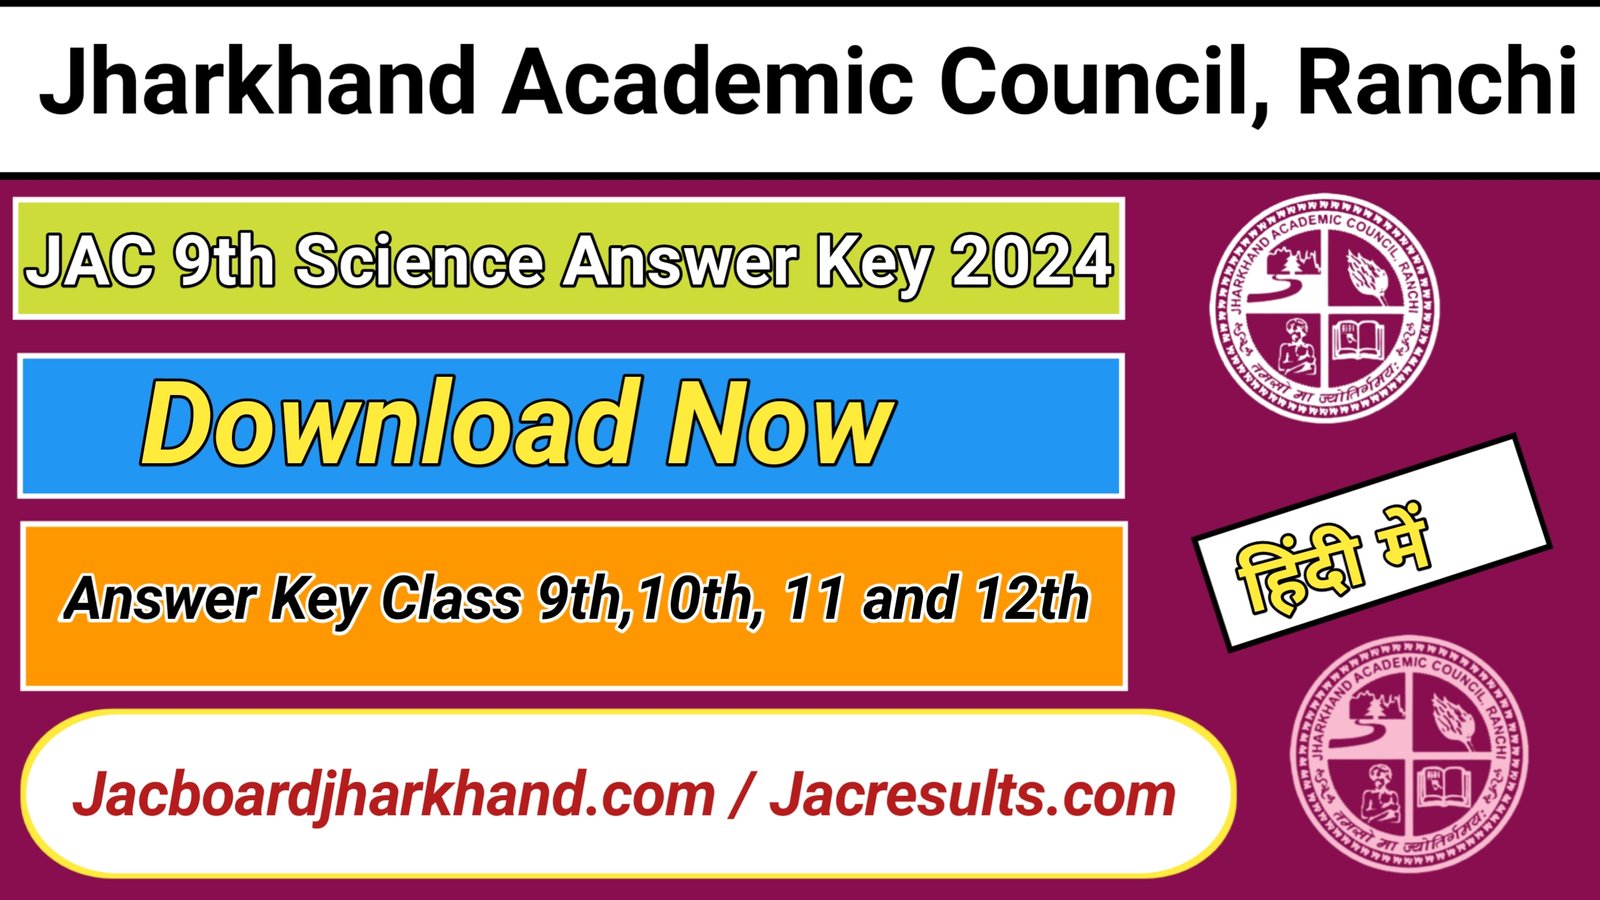 JAC 9th Science Answer key 2024